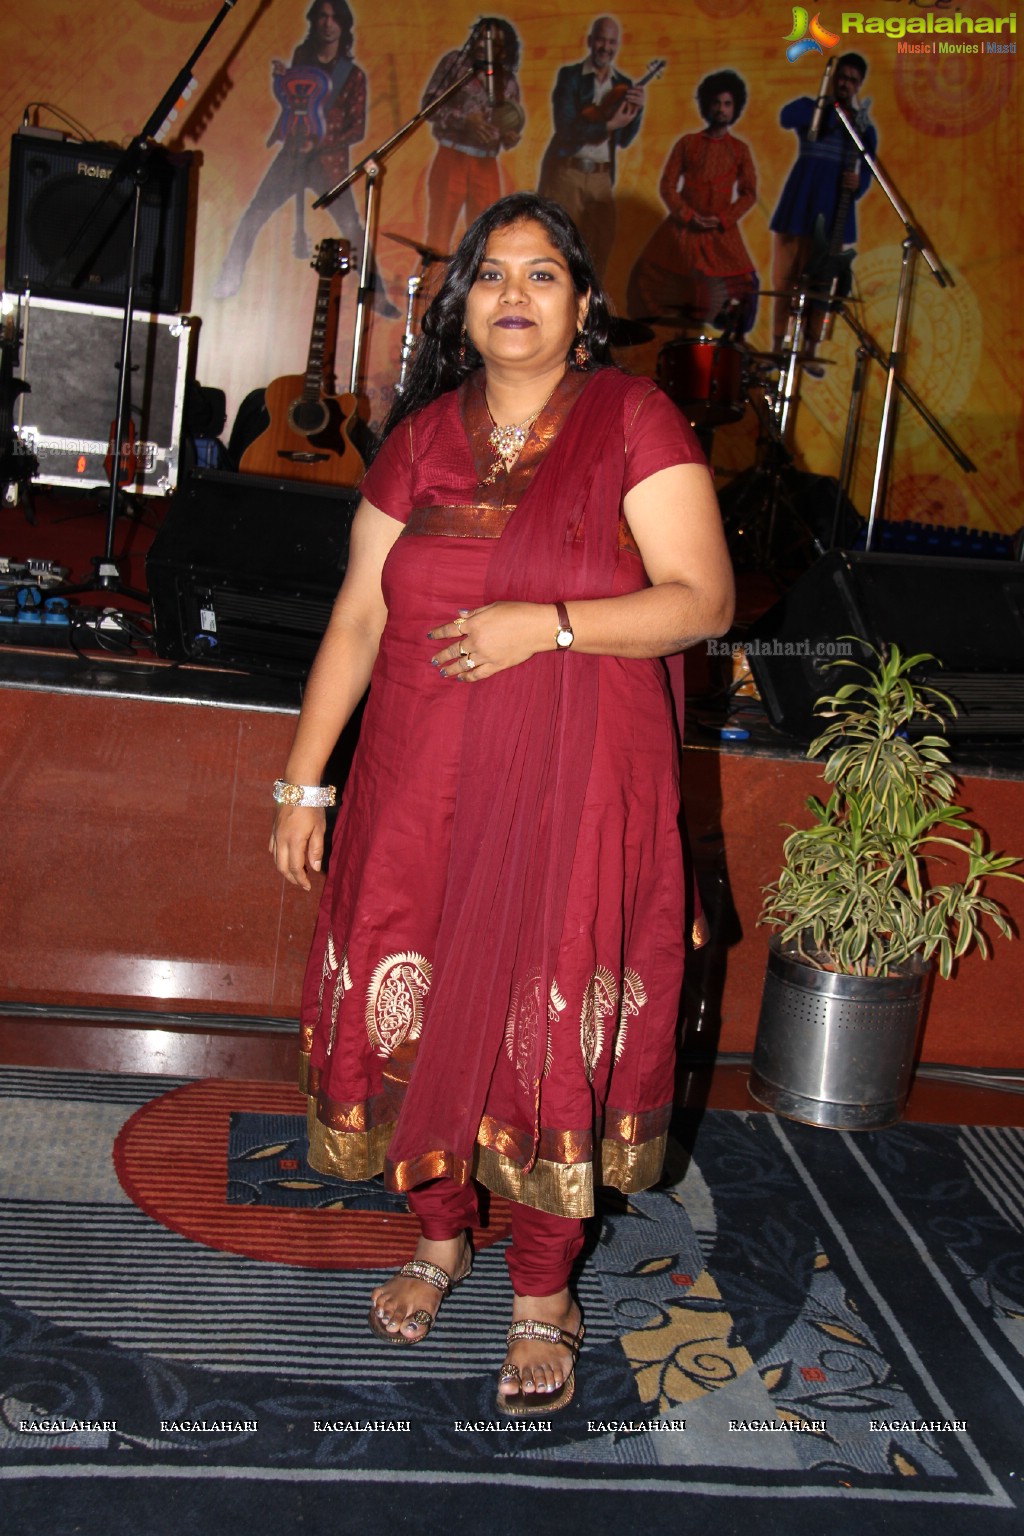 Nirnaya's Music Concert by Folk-Rock Band Swarathma